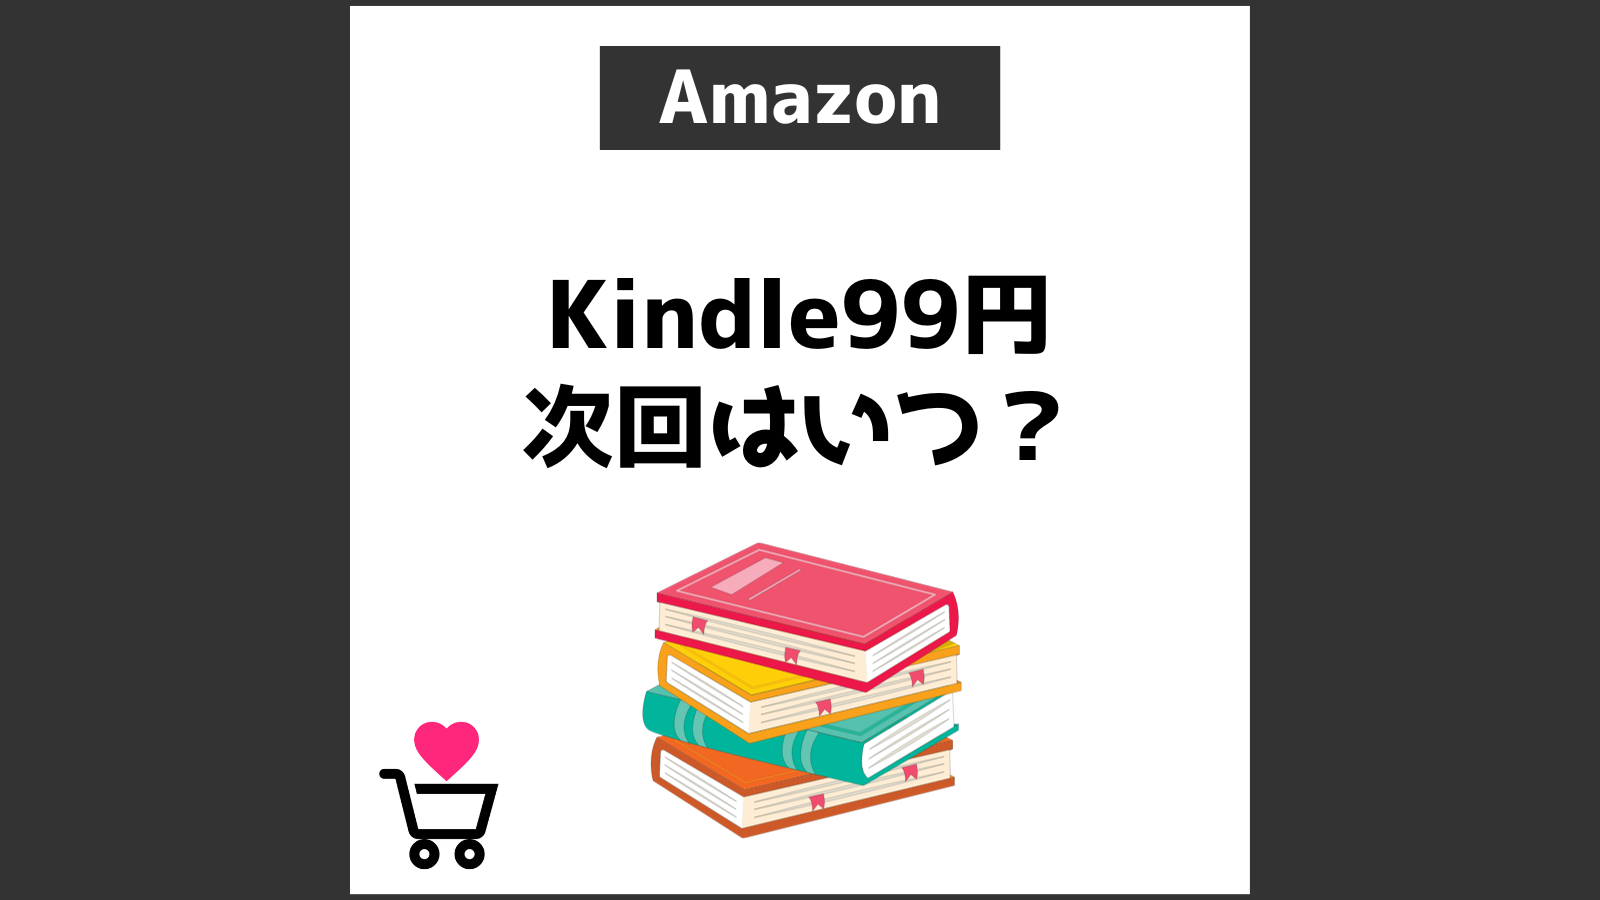 Kindle99円 次回はいつ？